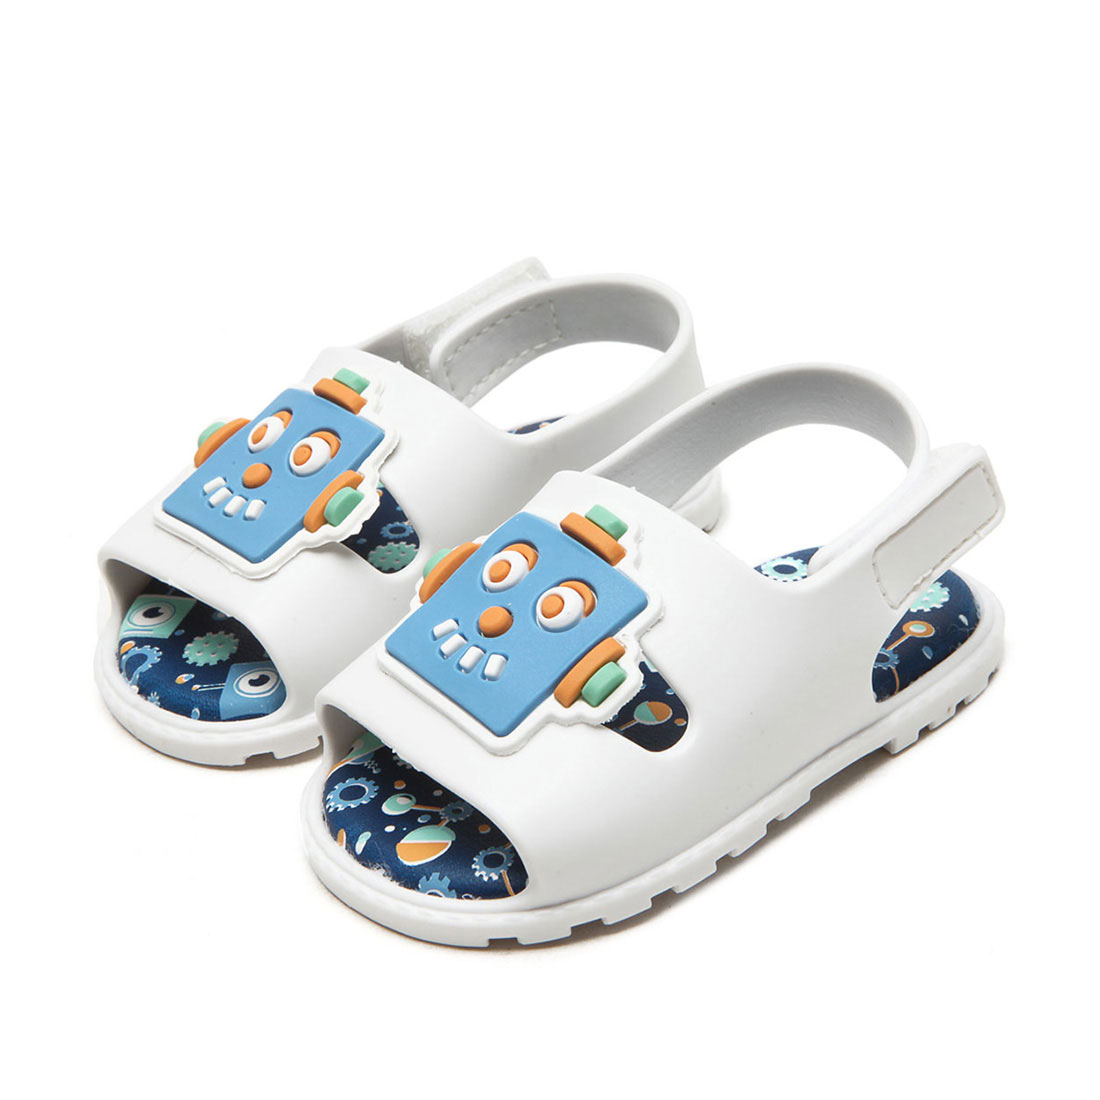 Cut plastic dongguan factory baby sandal children's shoes for boys CS2078